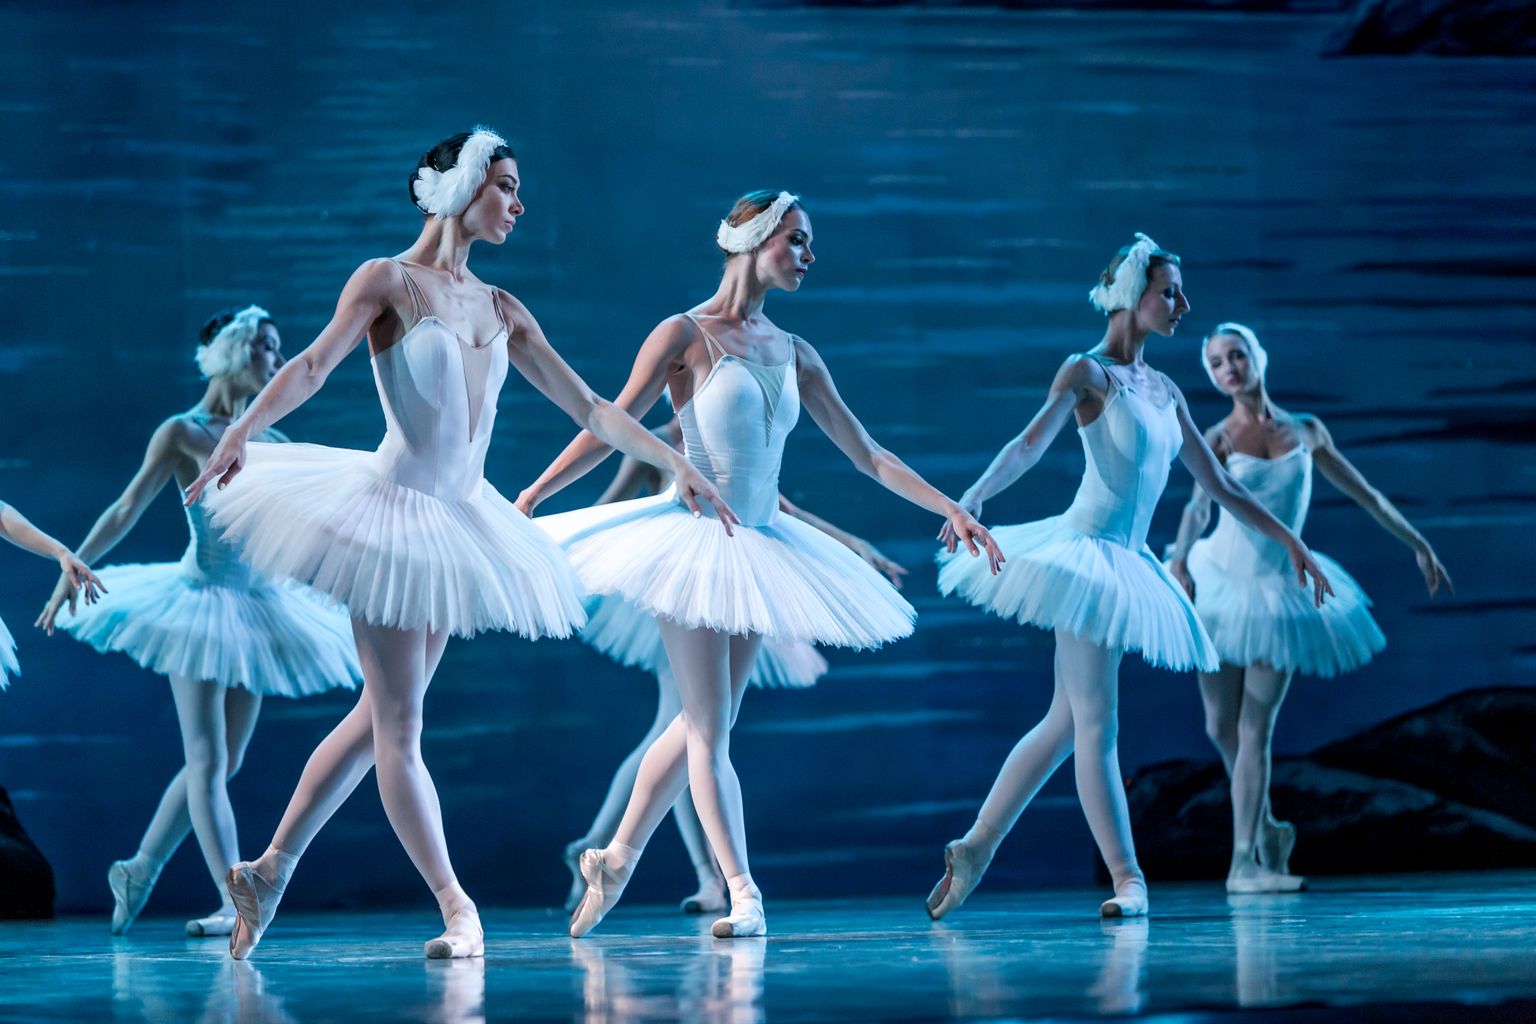 Сцена из балета "Лебединое озеро". Иллюстративное фото